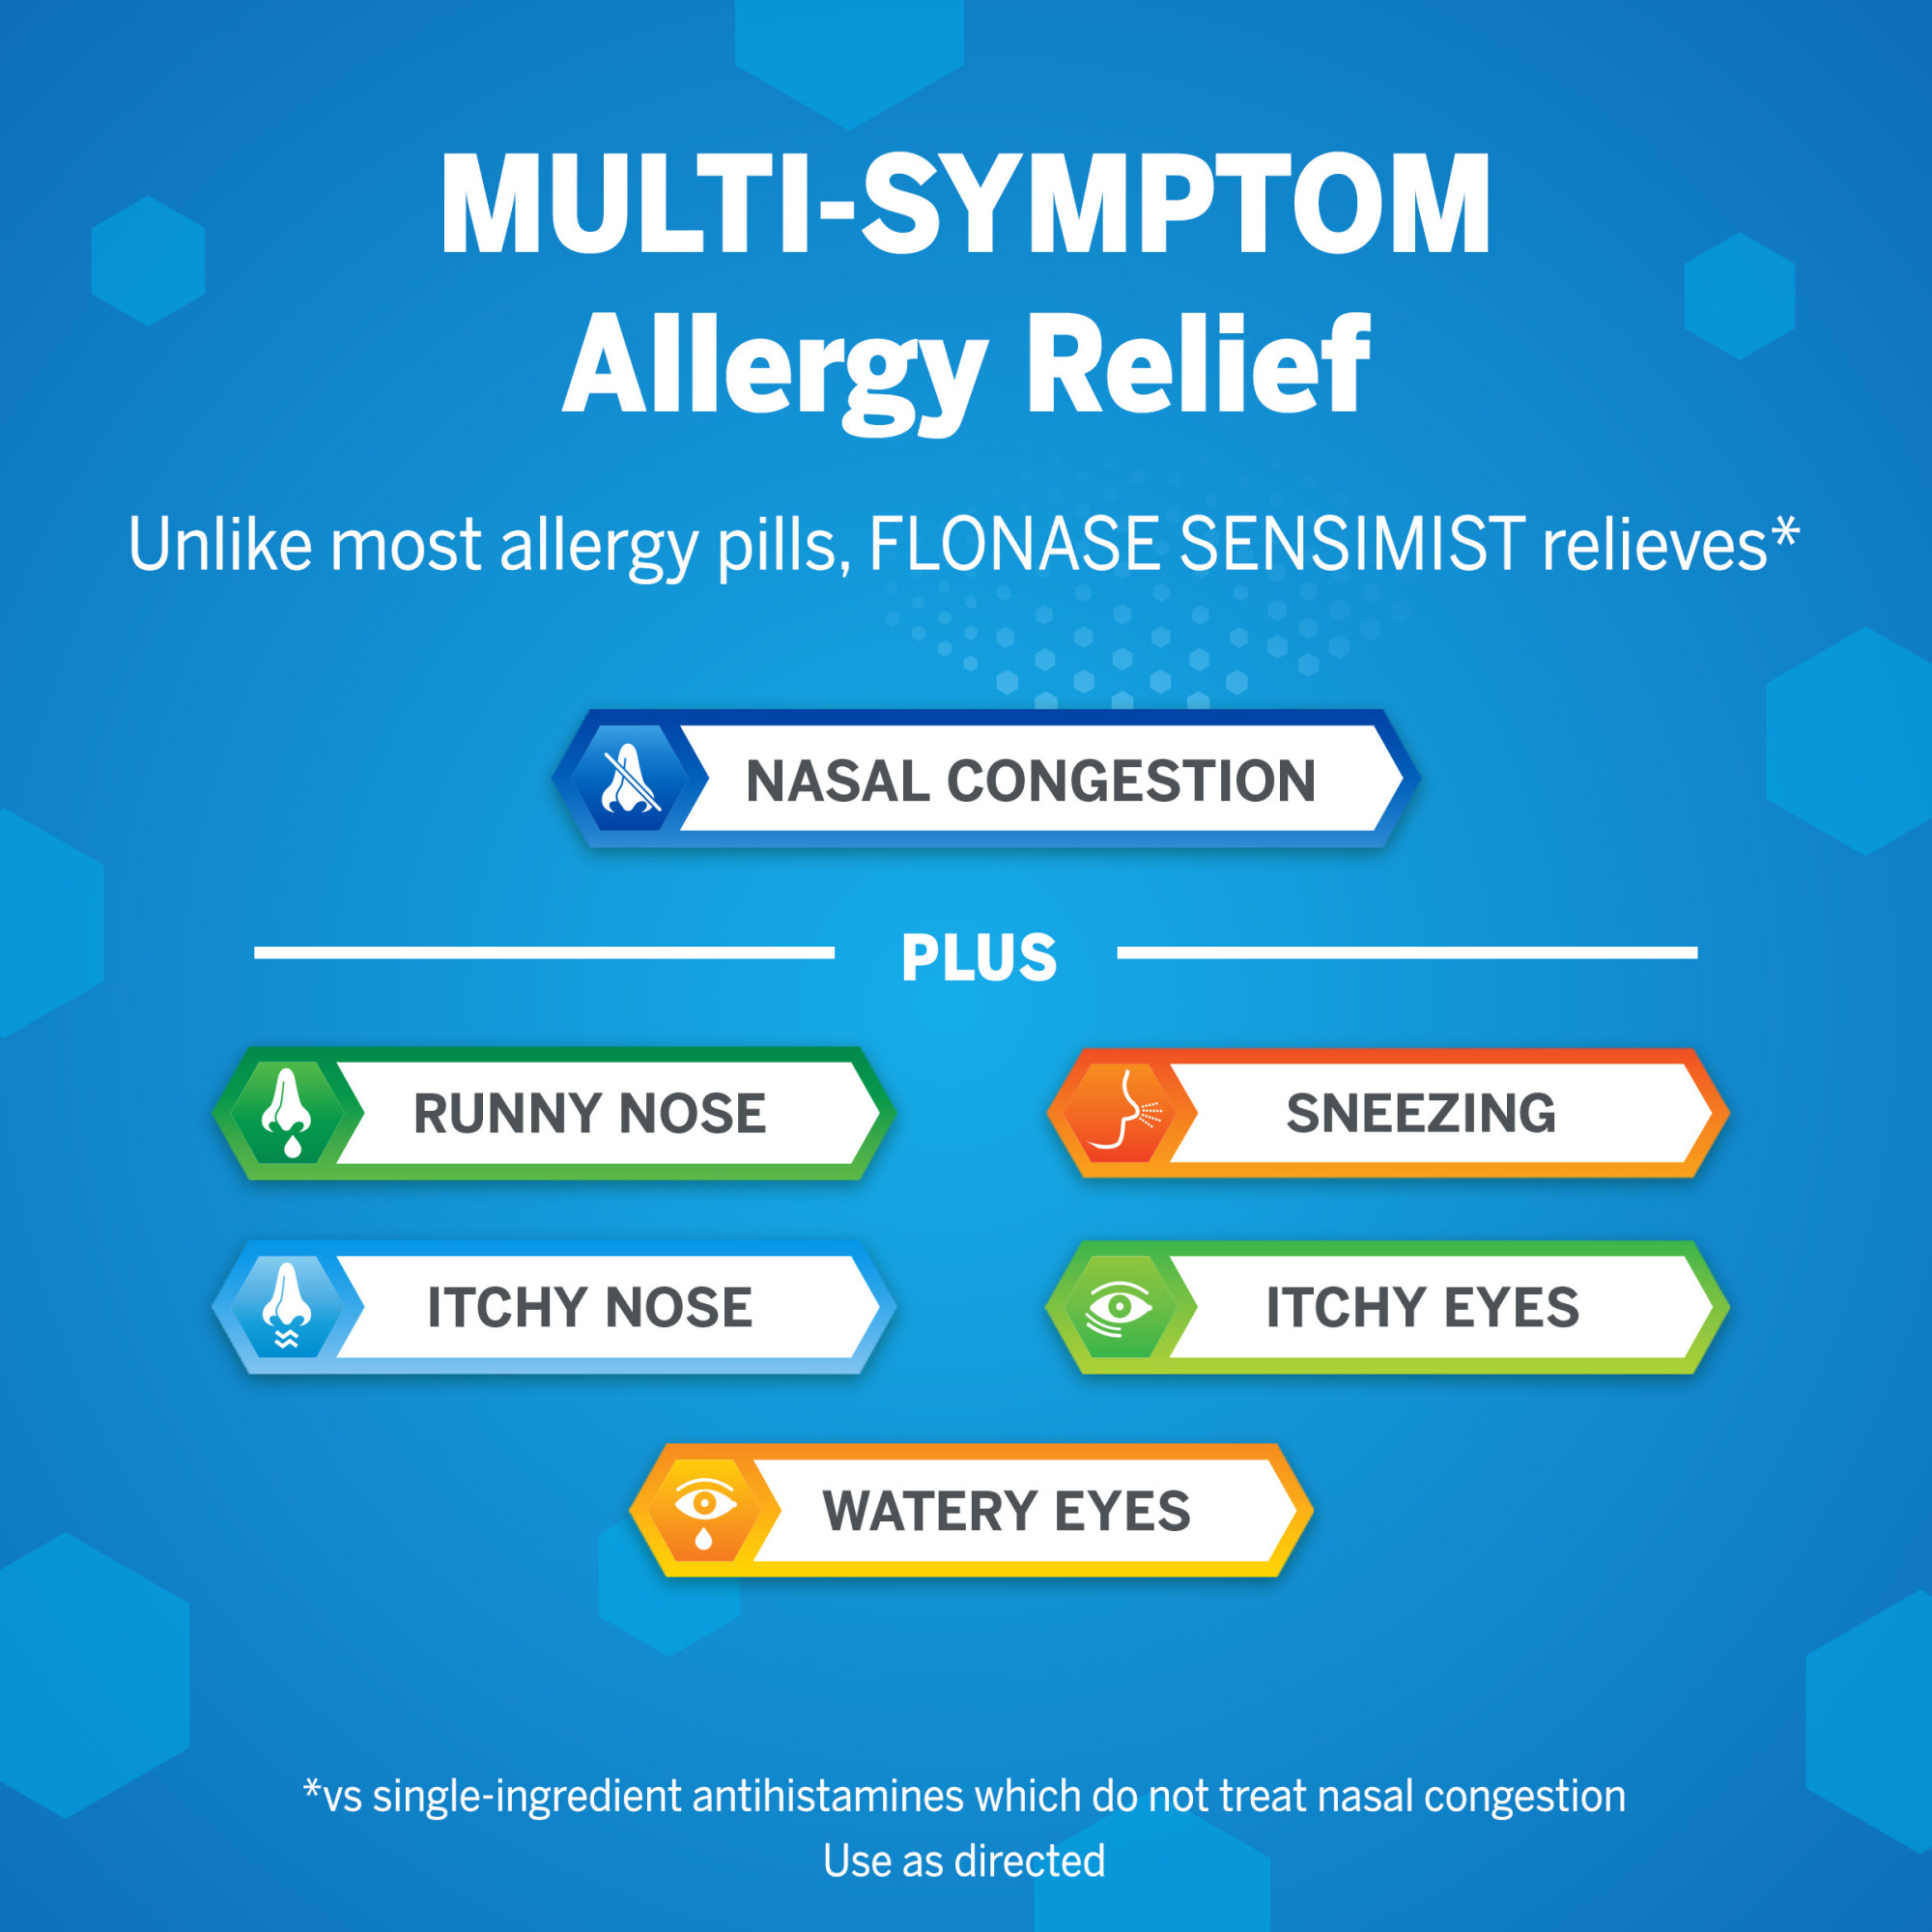 Flonase Sensimist Non-Drowsy Decongestant Allergy Relief Medicine Nasal Spray, 120 Sprays - image 2 of 10